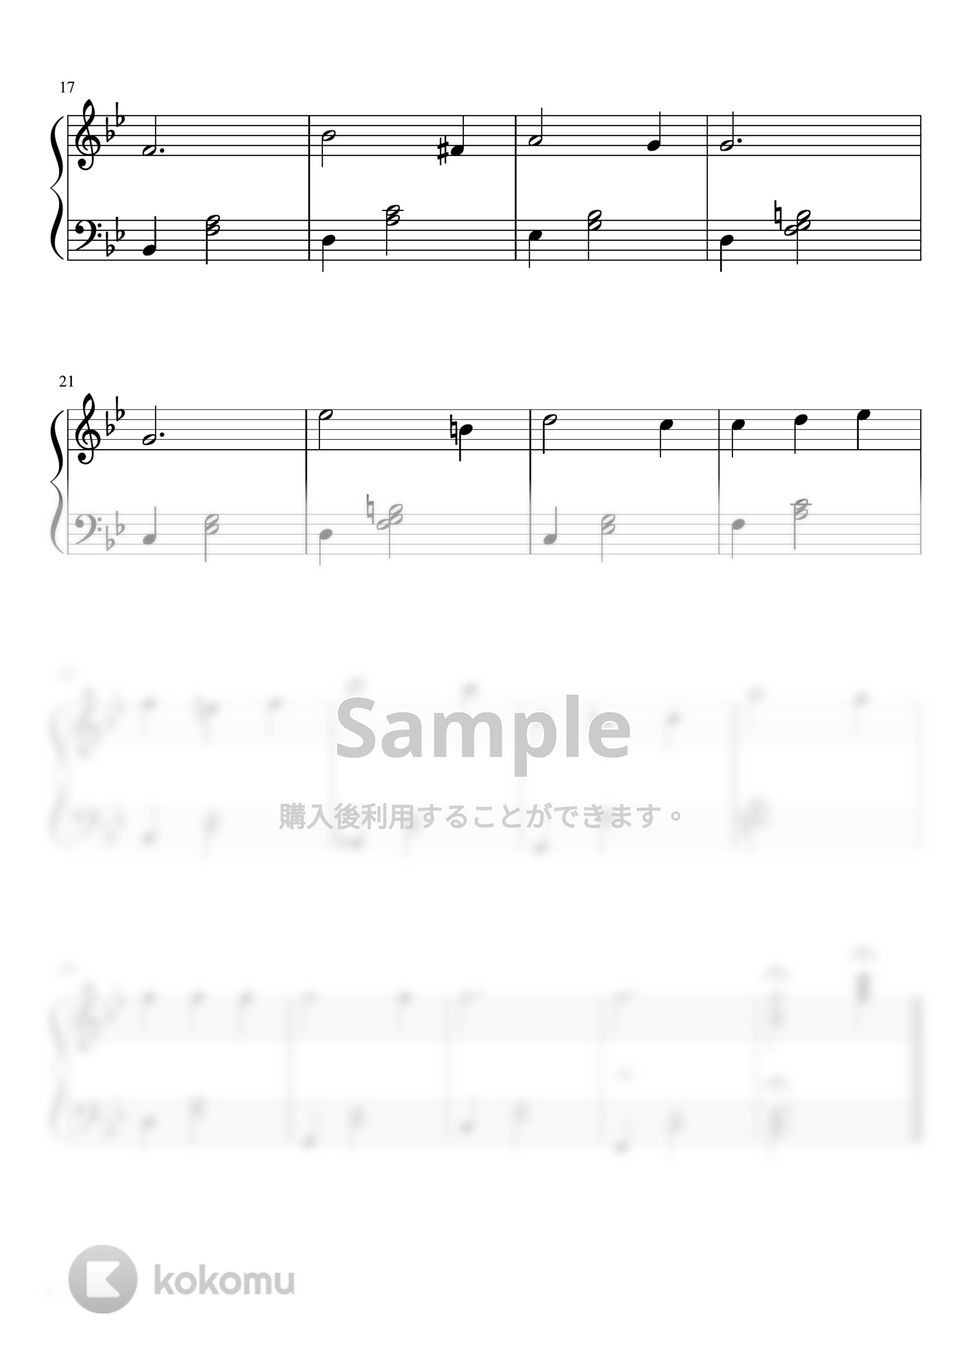 F.チャーチル - いつか王子様が (Bdur/ピアノソロ初〜中級) by pfkaori